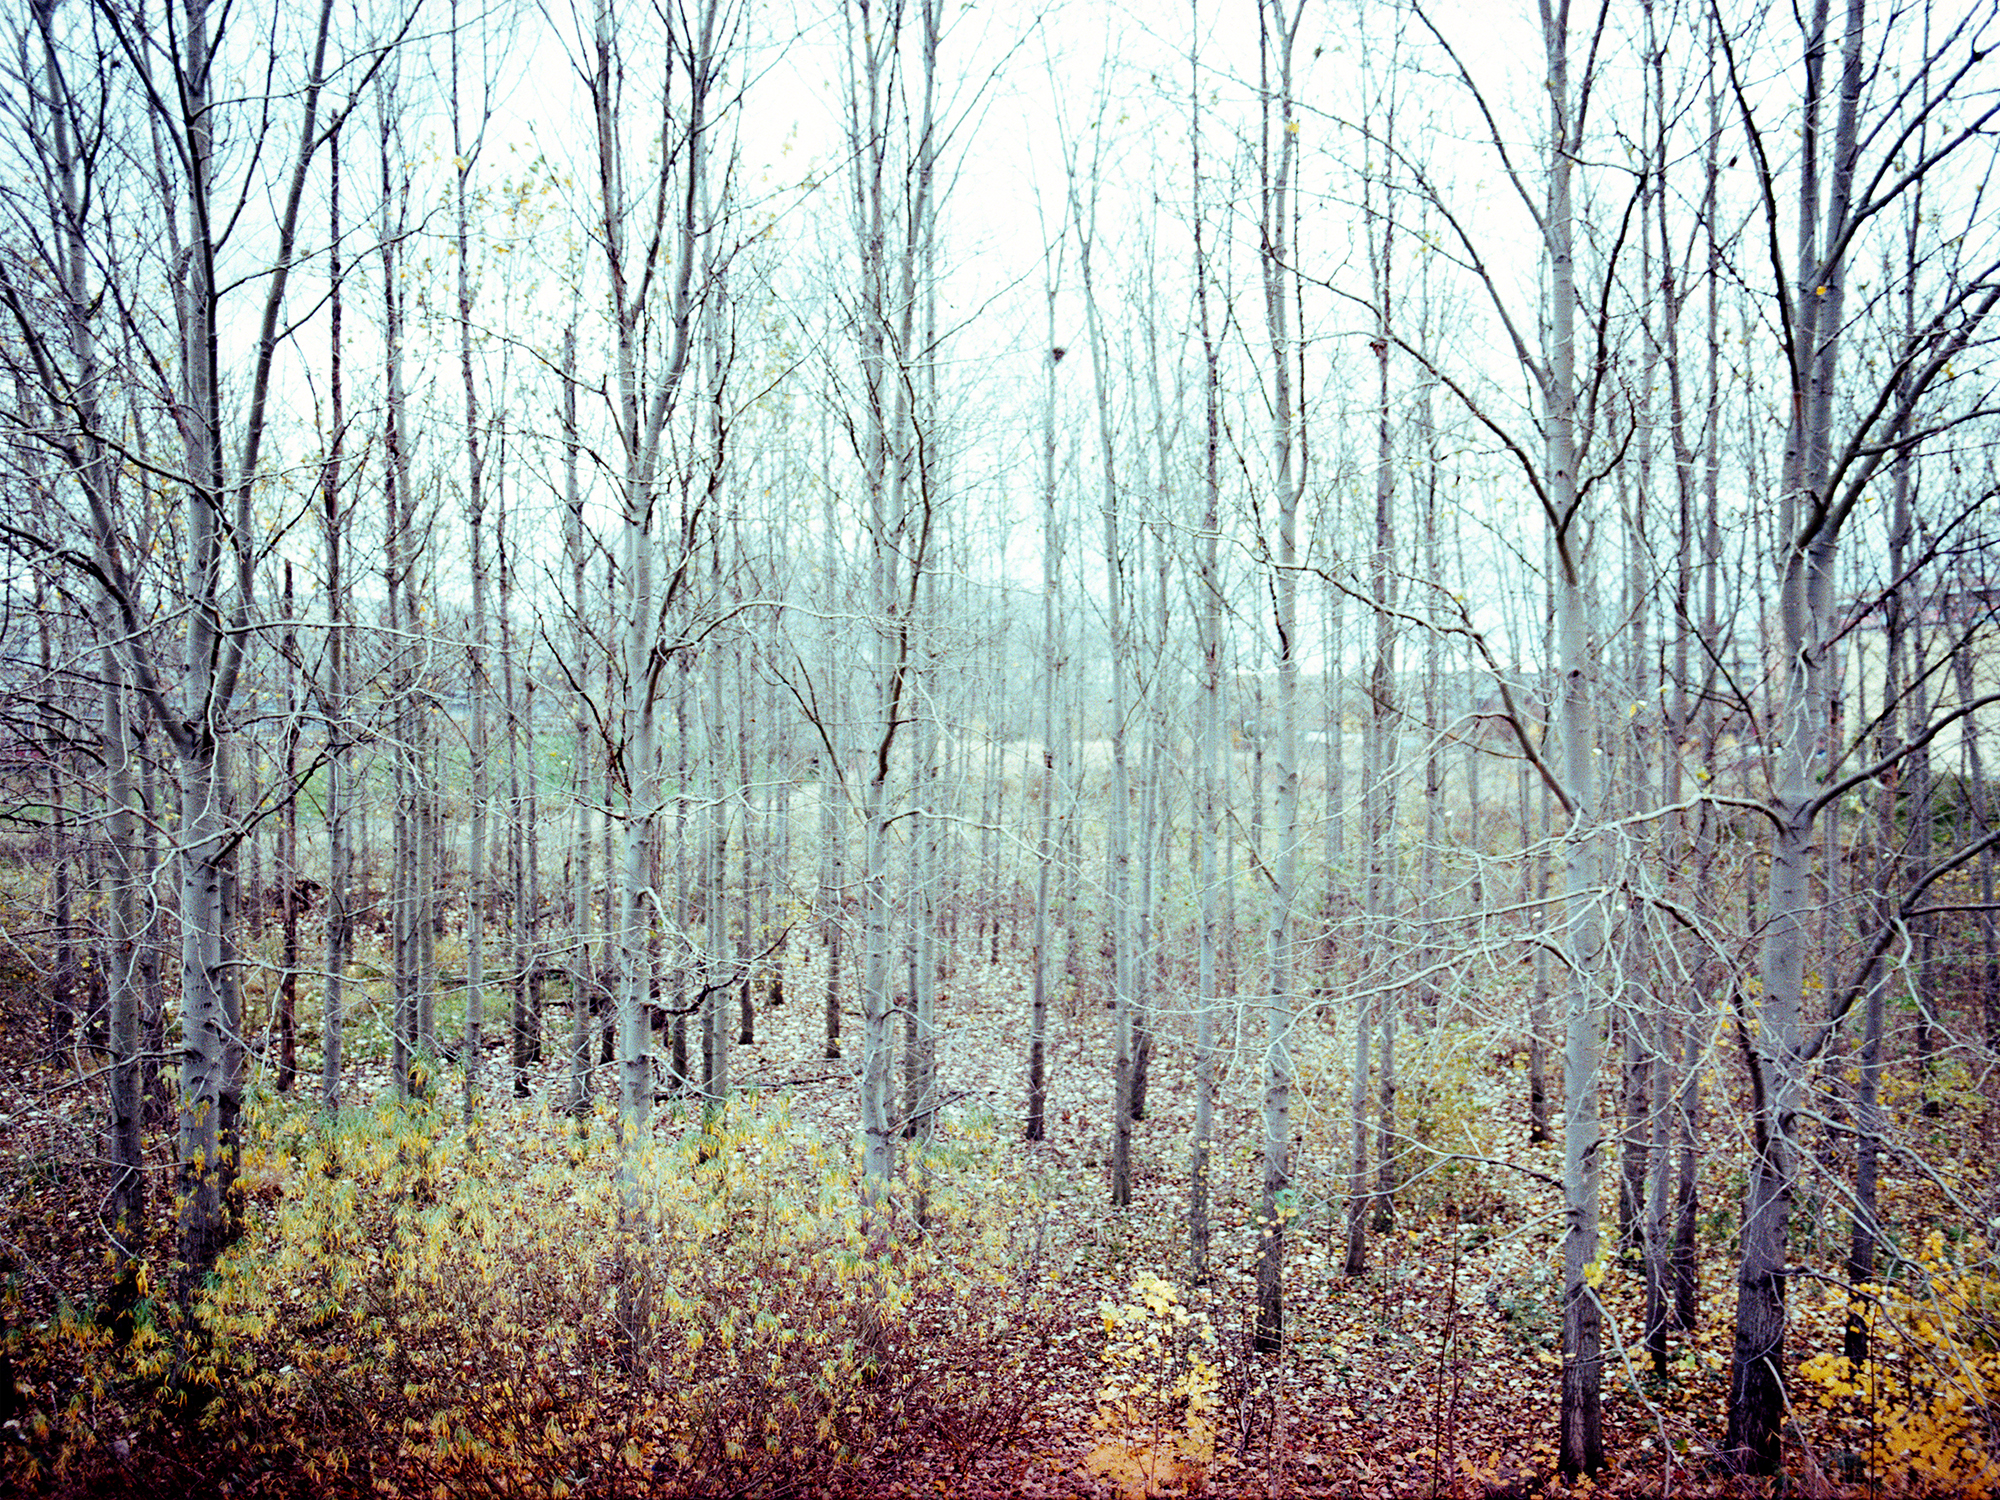 03_into the woods_rh Kopie.jpg